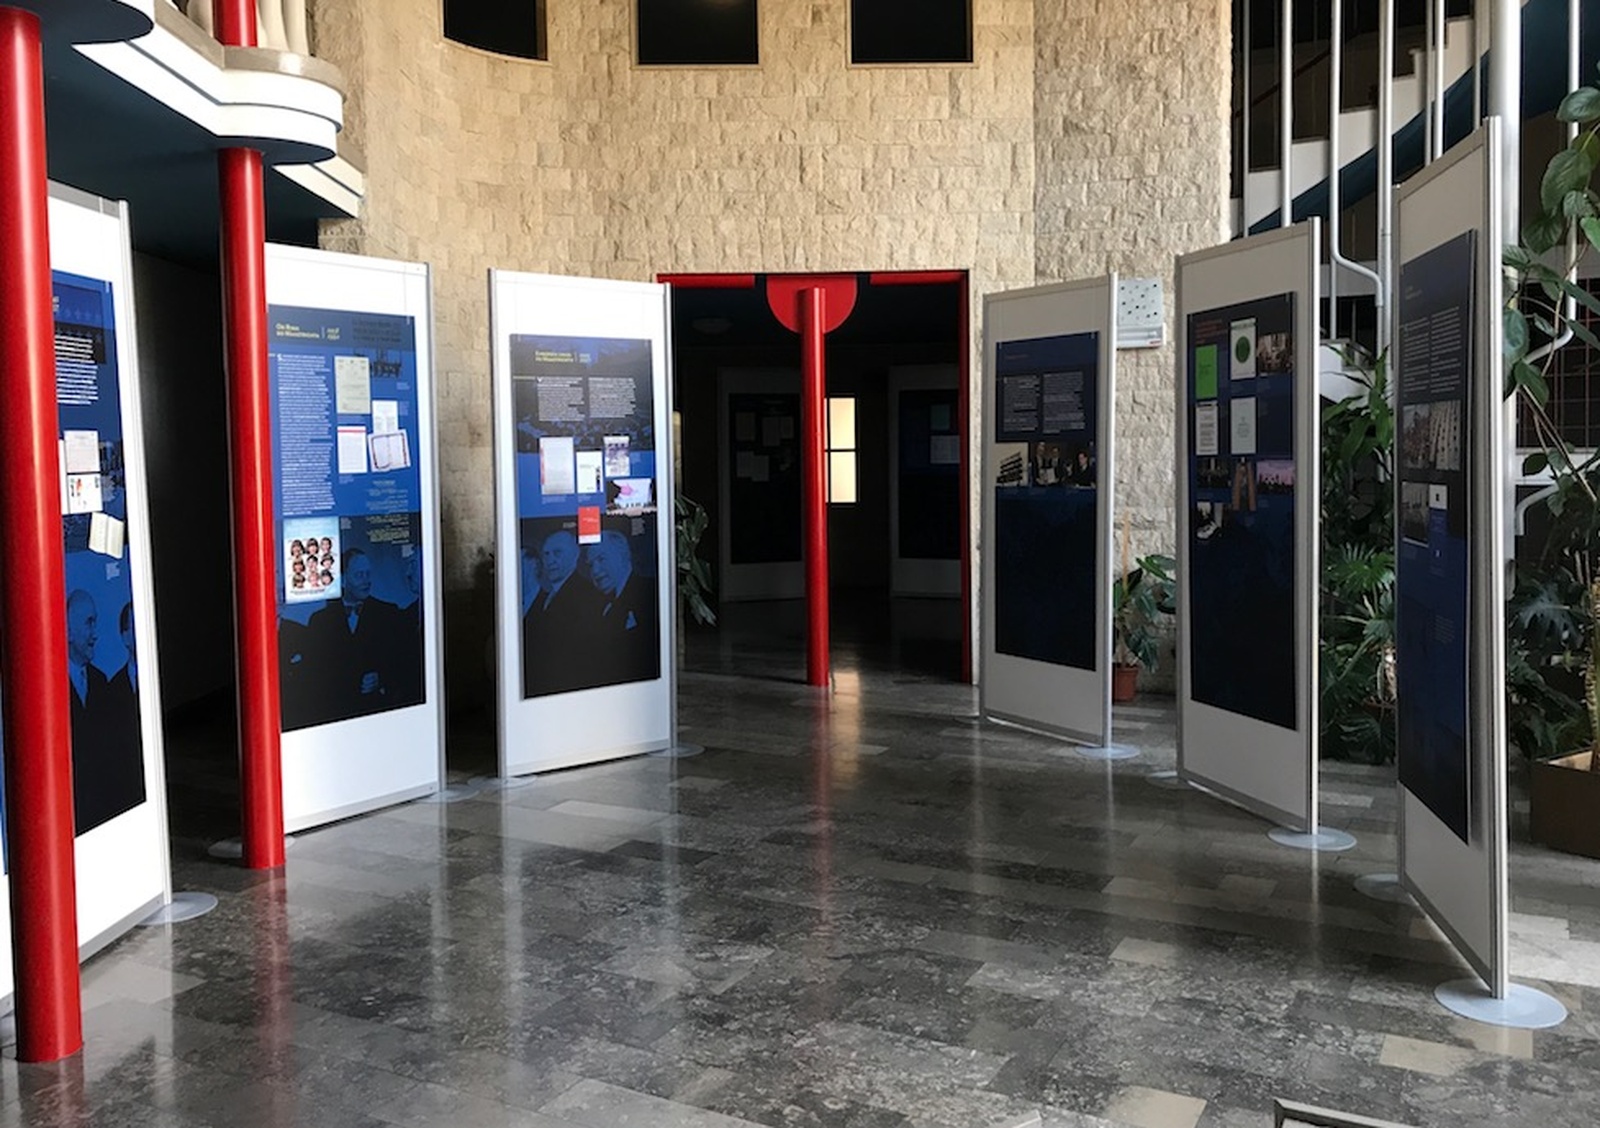 Exhibition "Ever Closer Union" at the University of Nova Gorica